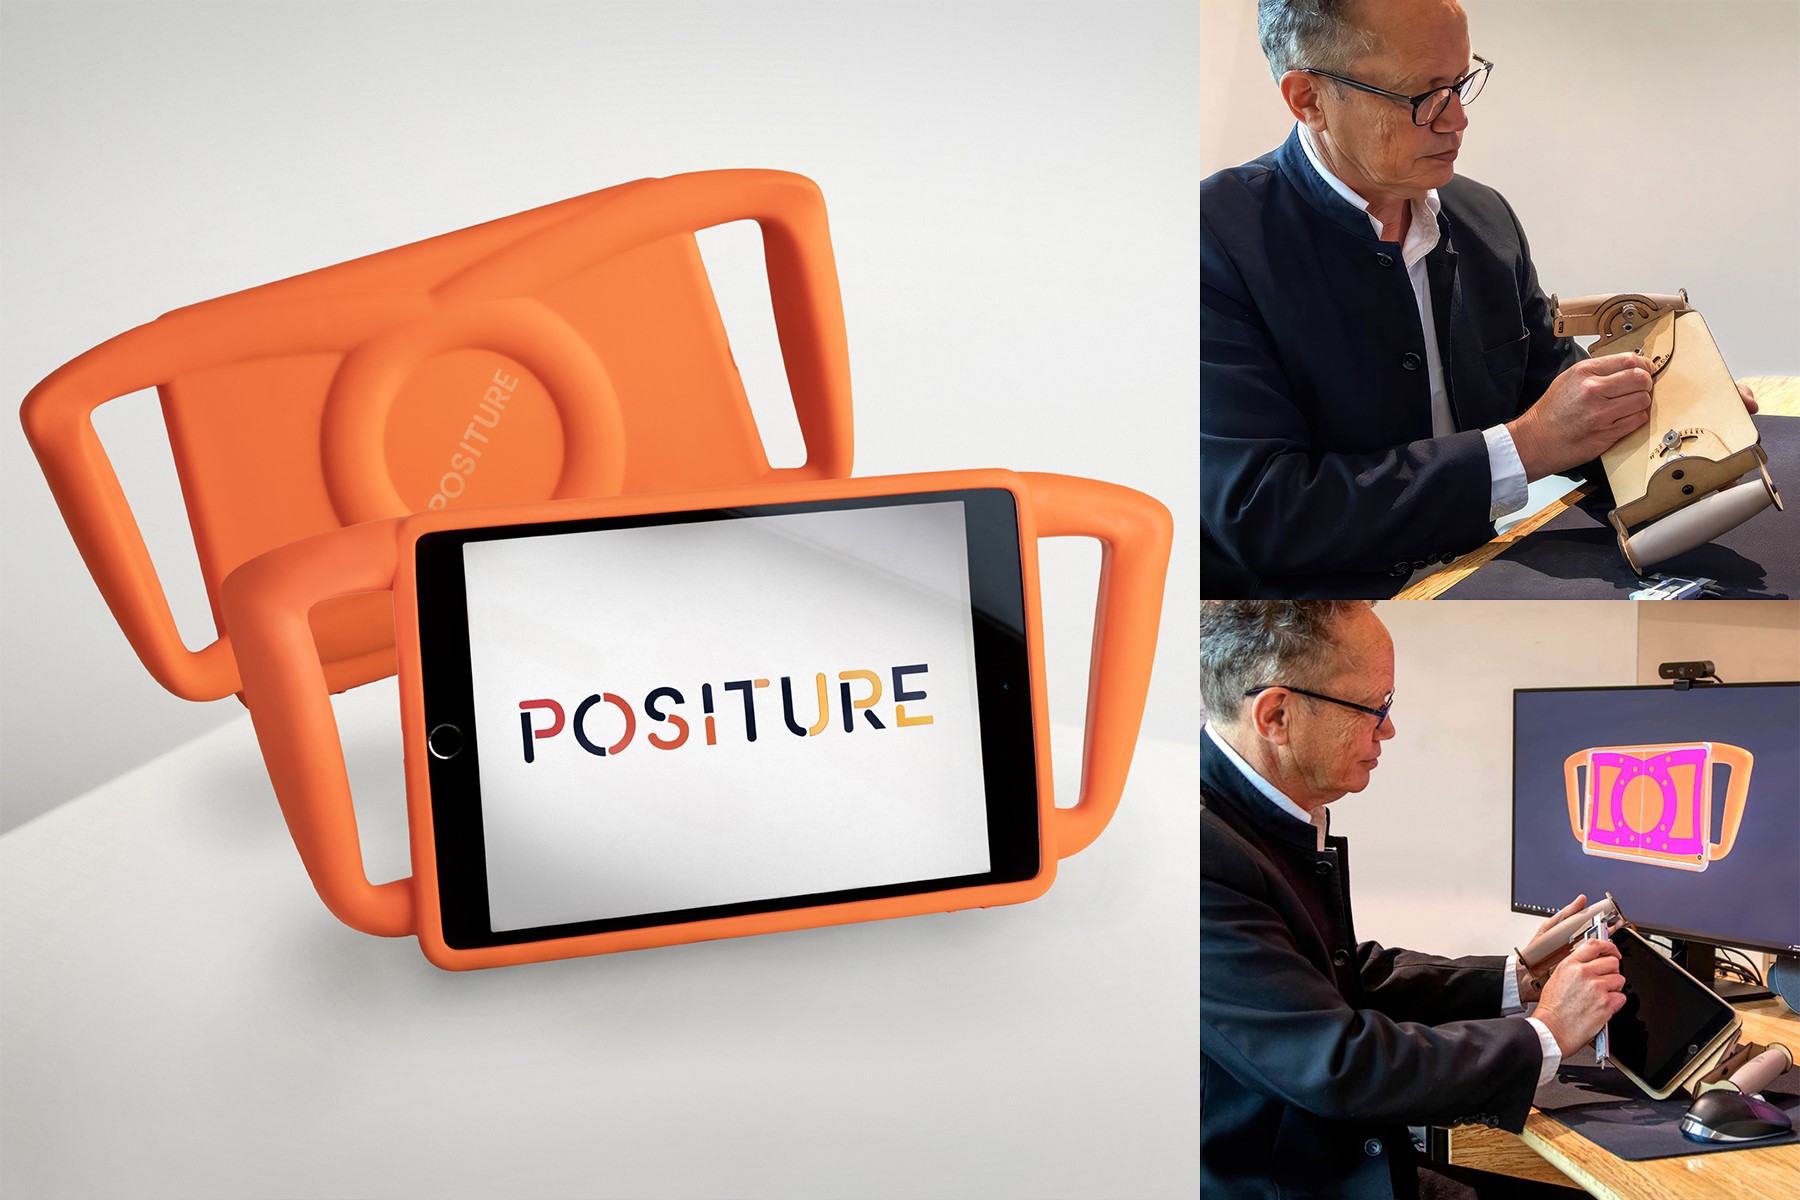 Positure Grip - Posture controller for children’s tablet use